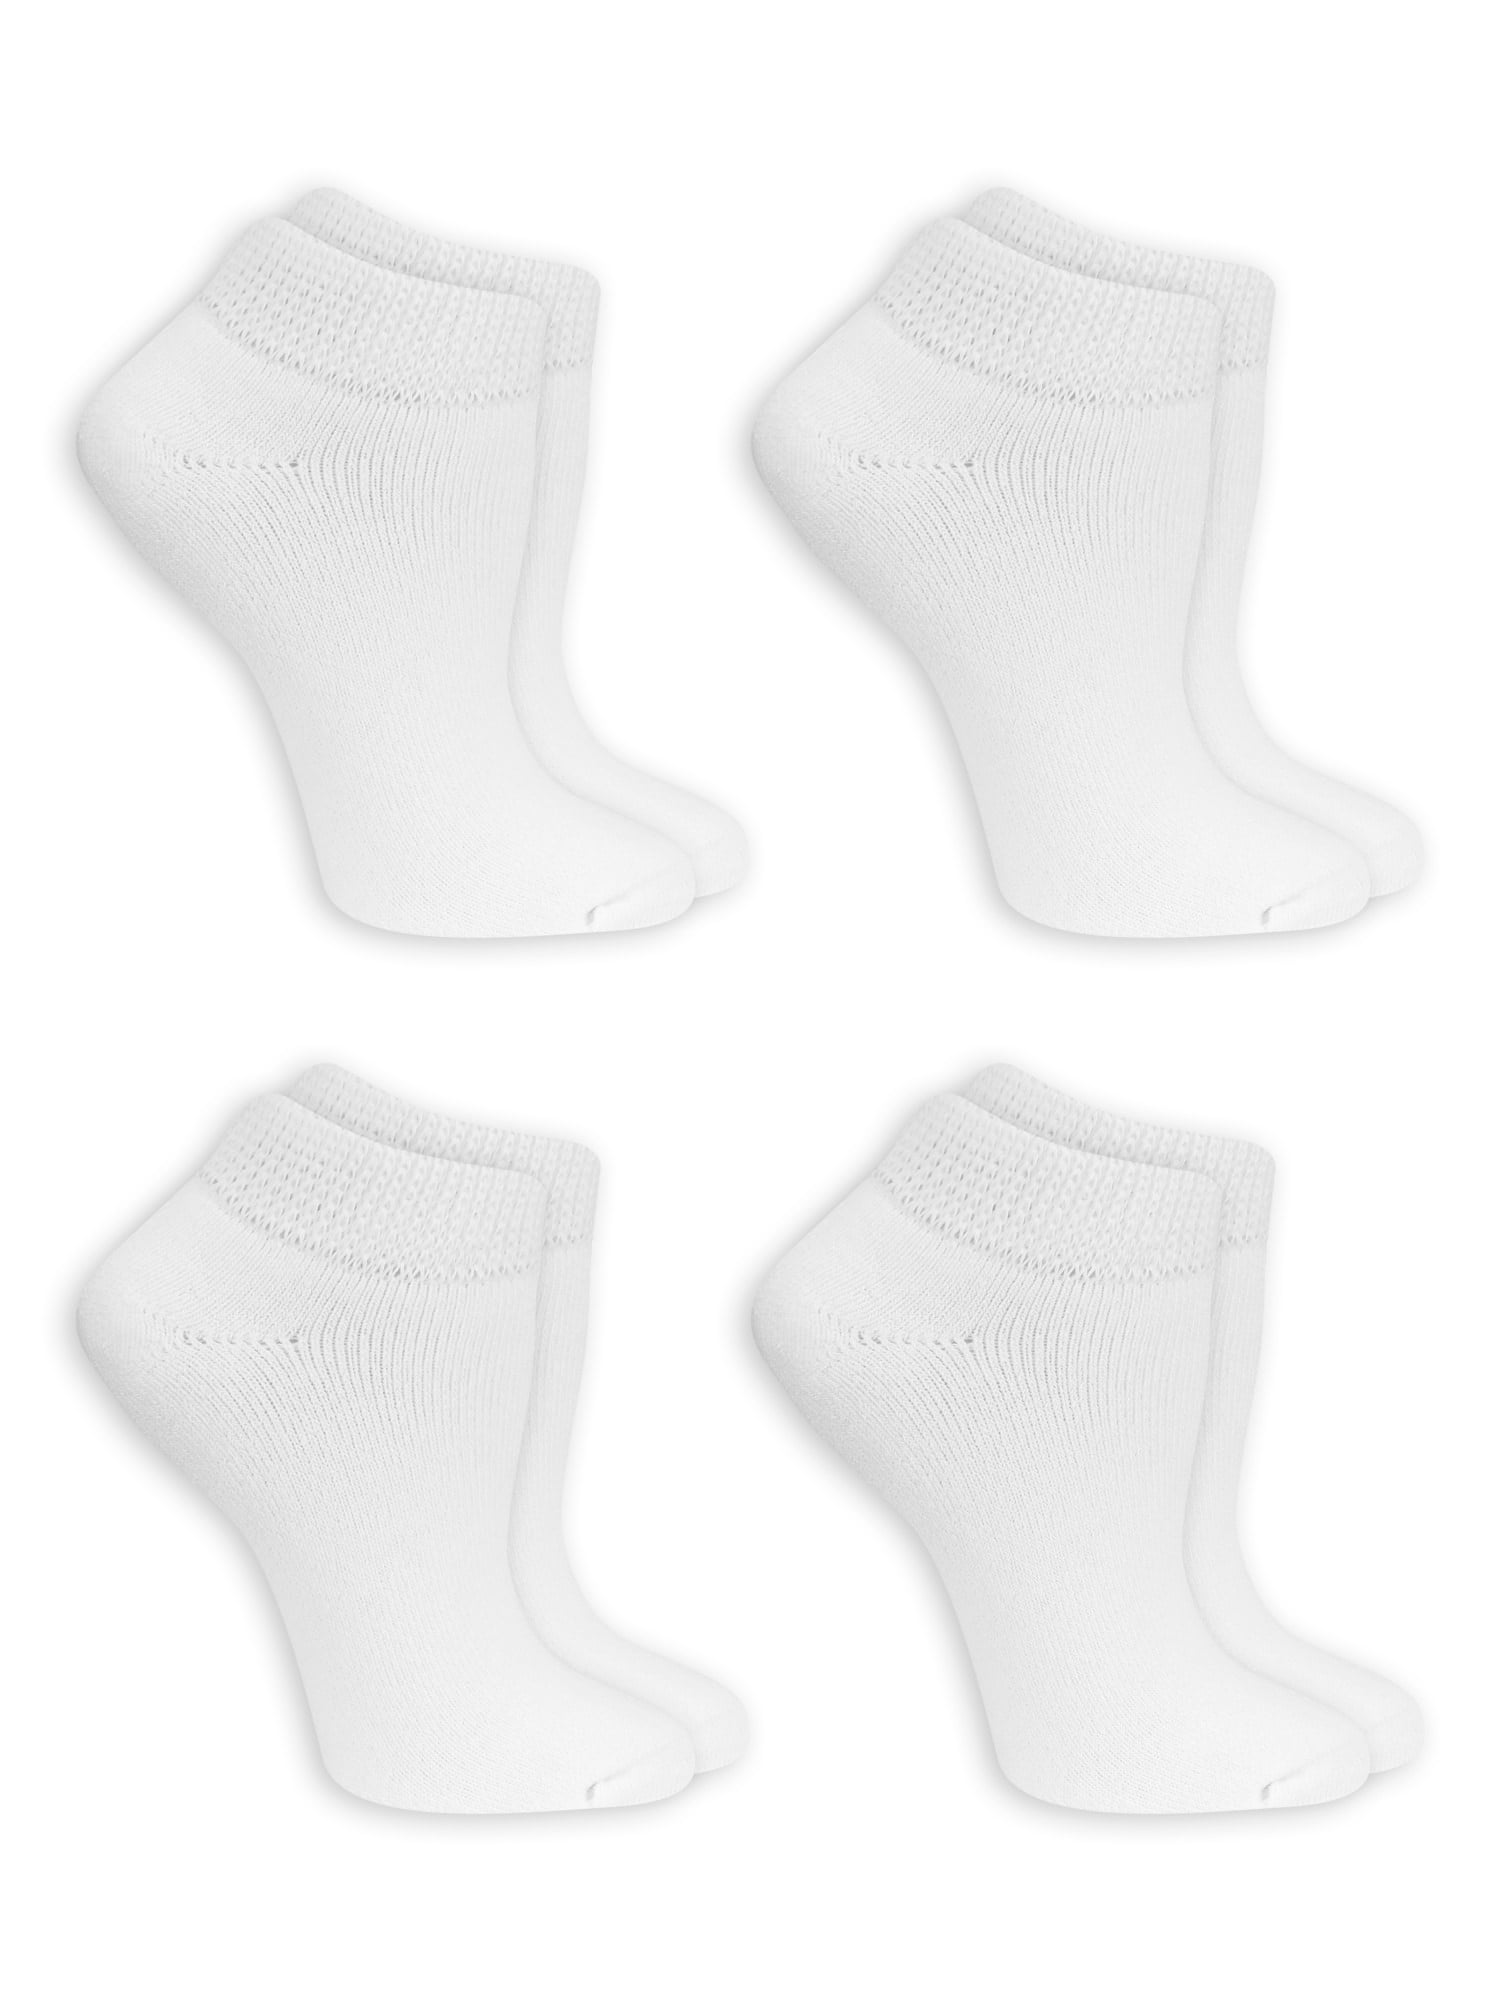 Scholls Womens Non-Binding Low Cut 4 Pack Casual Socks Dr